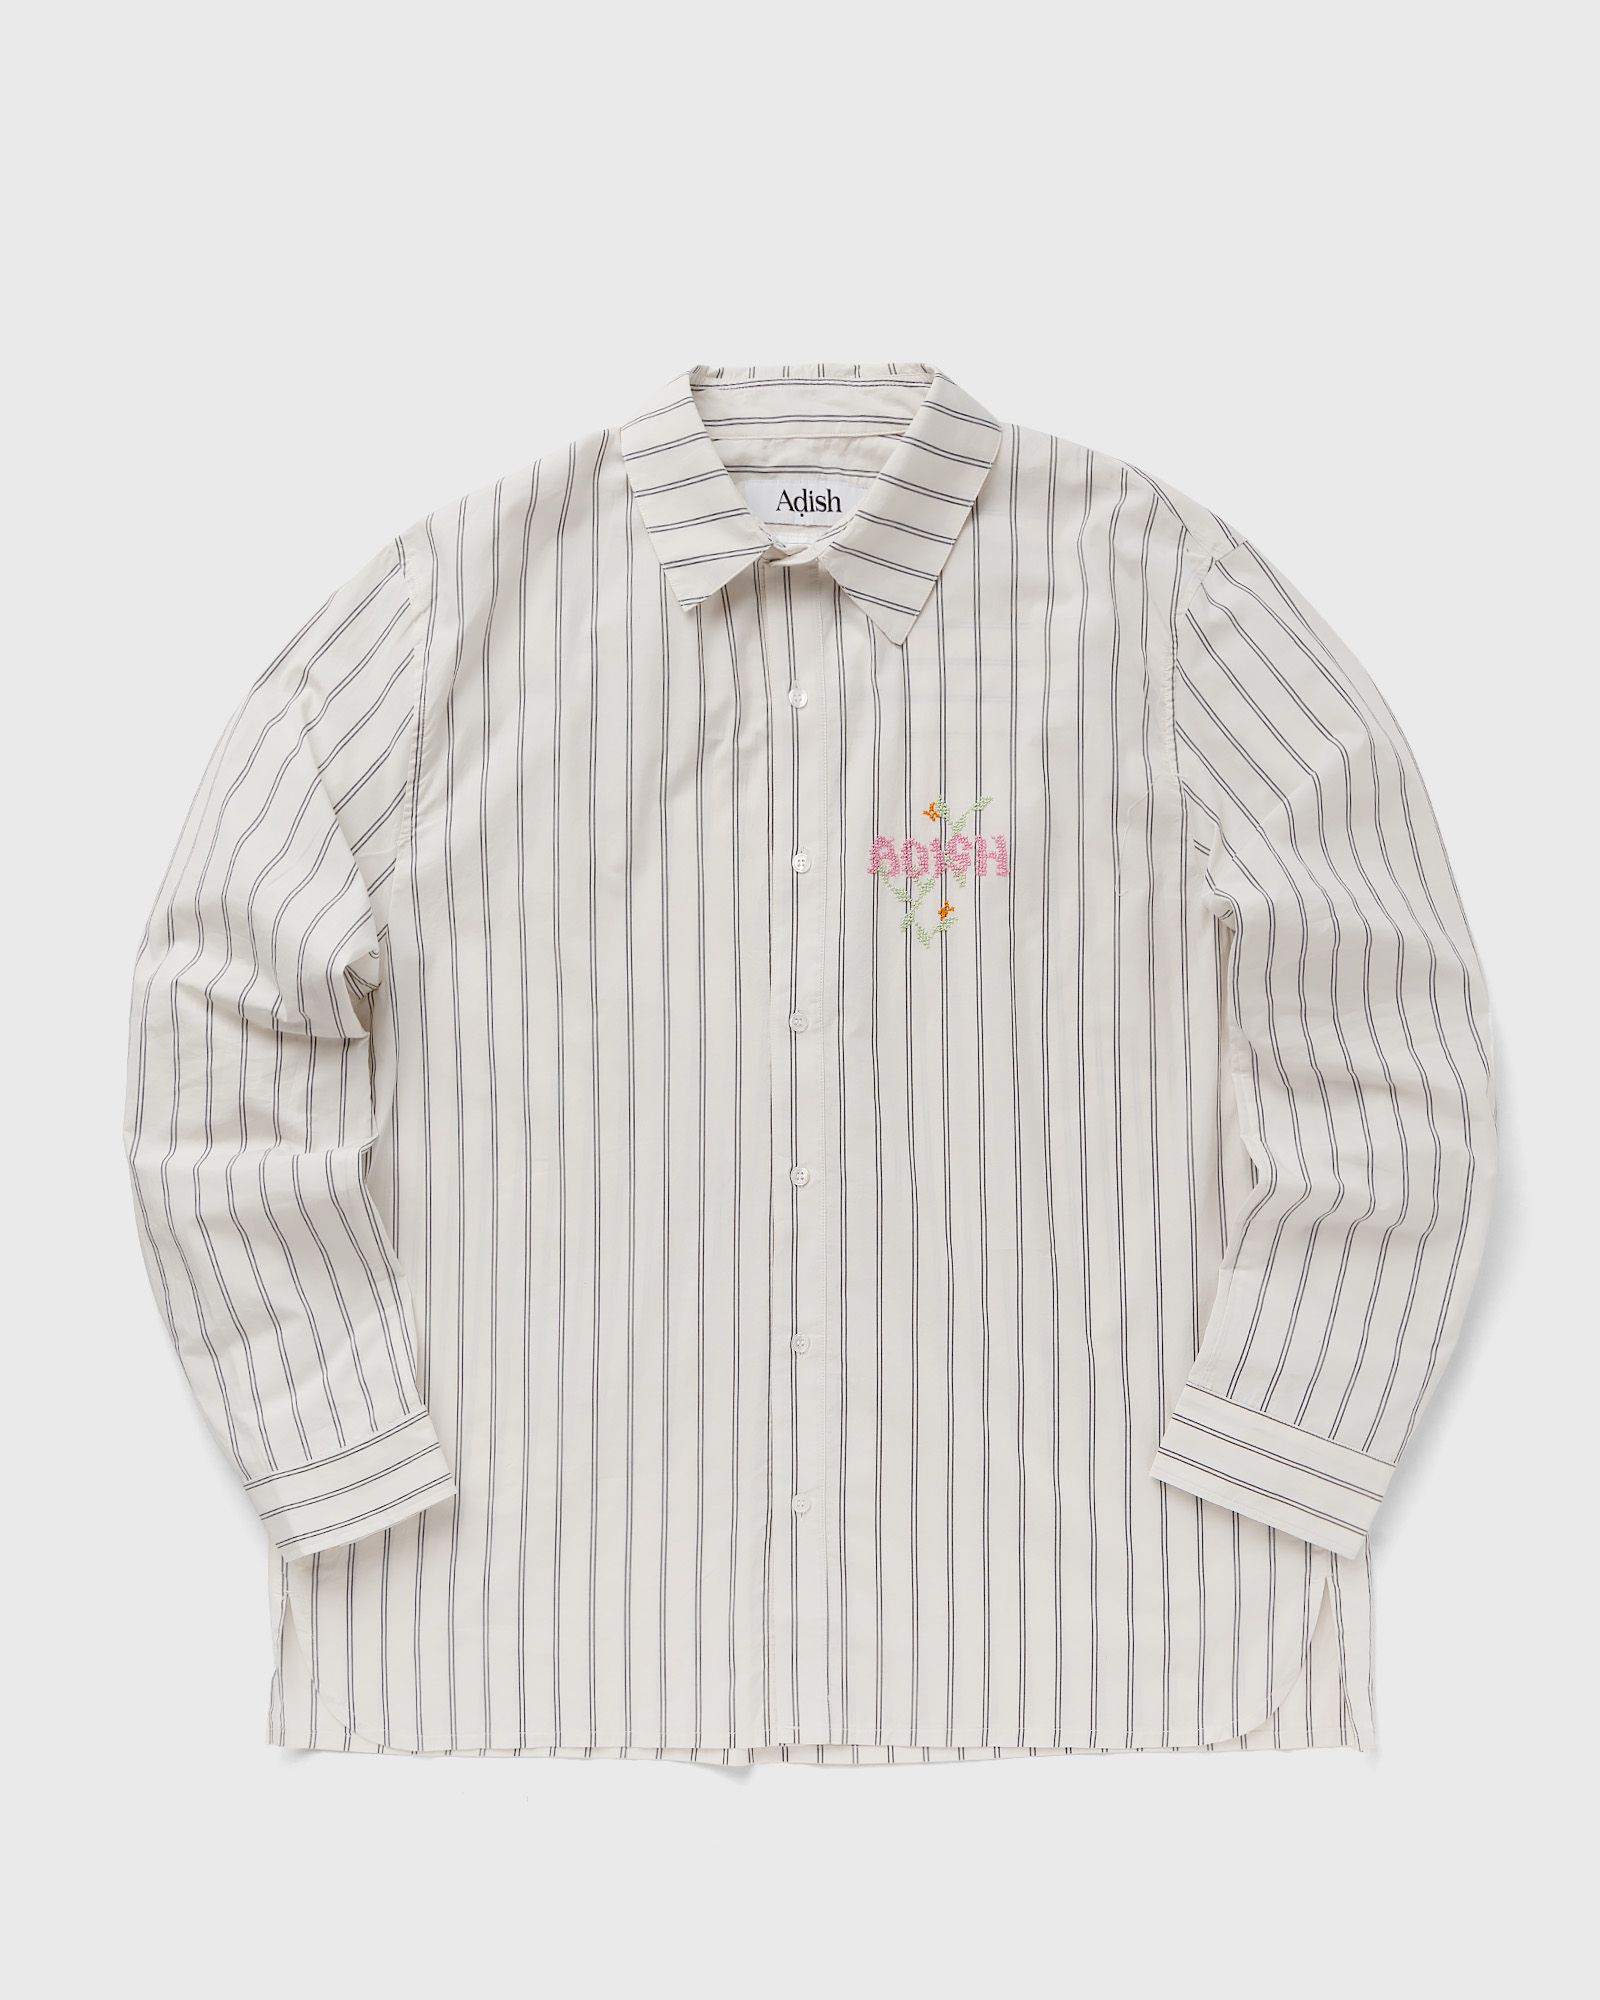 ADISH - nafnuf logo cotton striped shirt men longsleeves white in größe:l